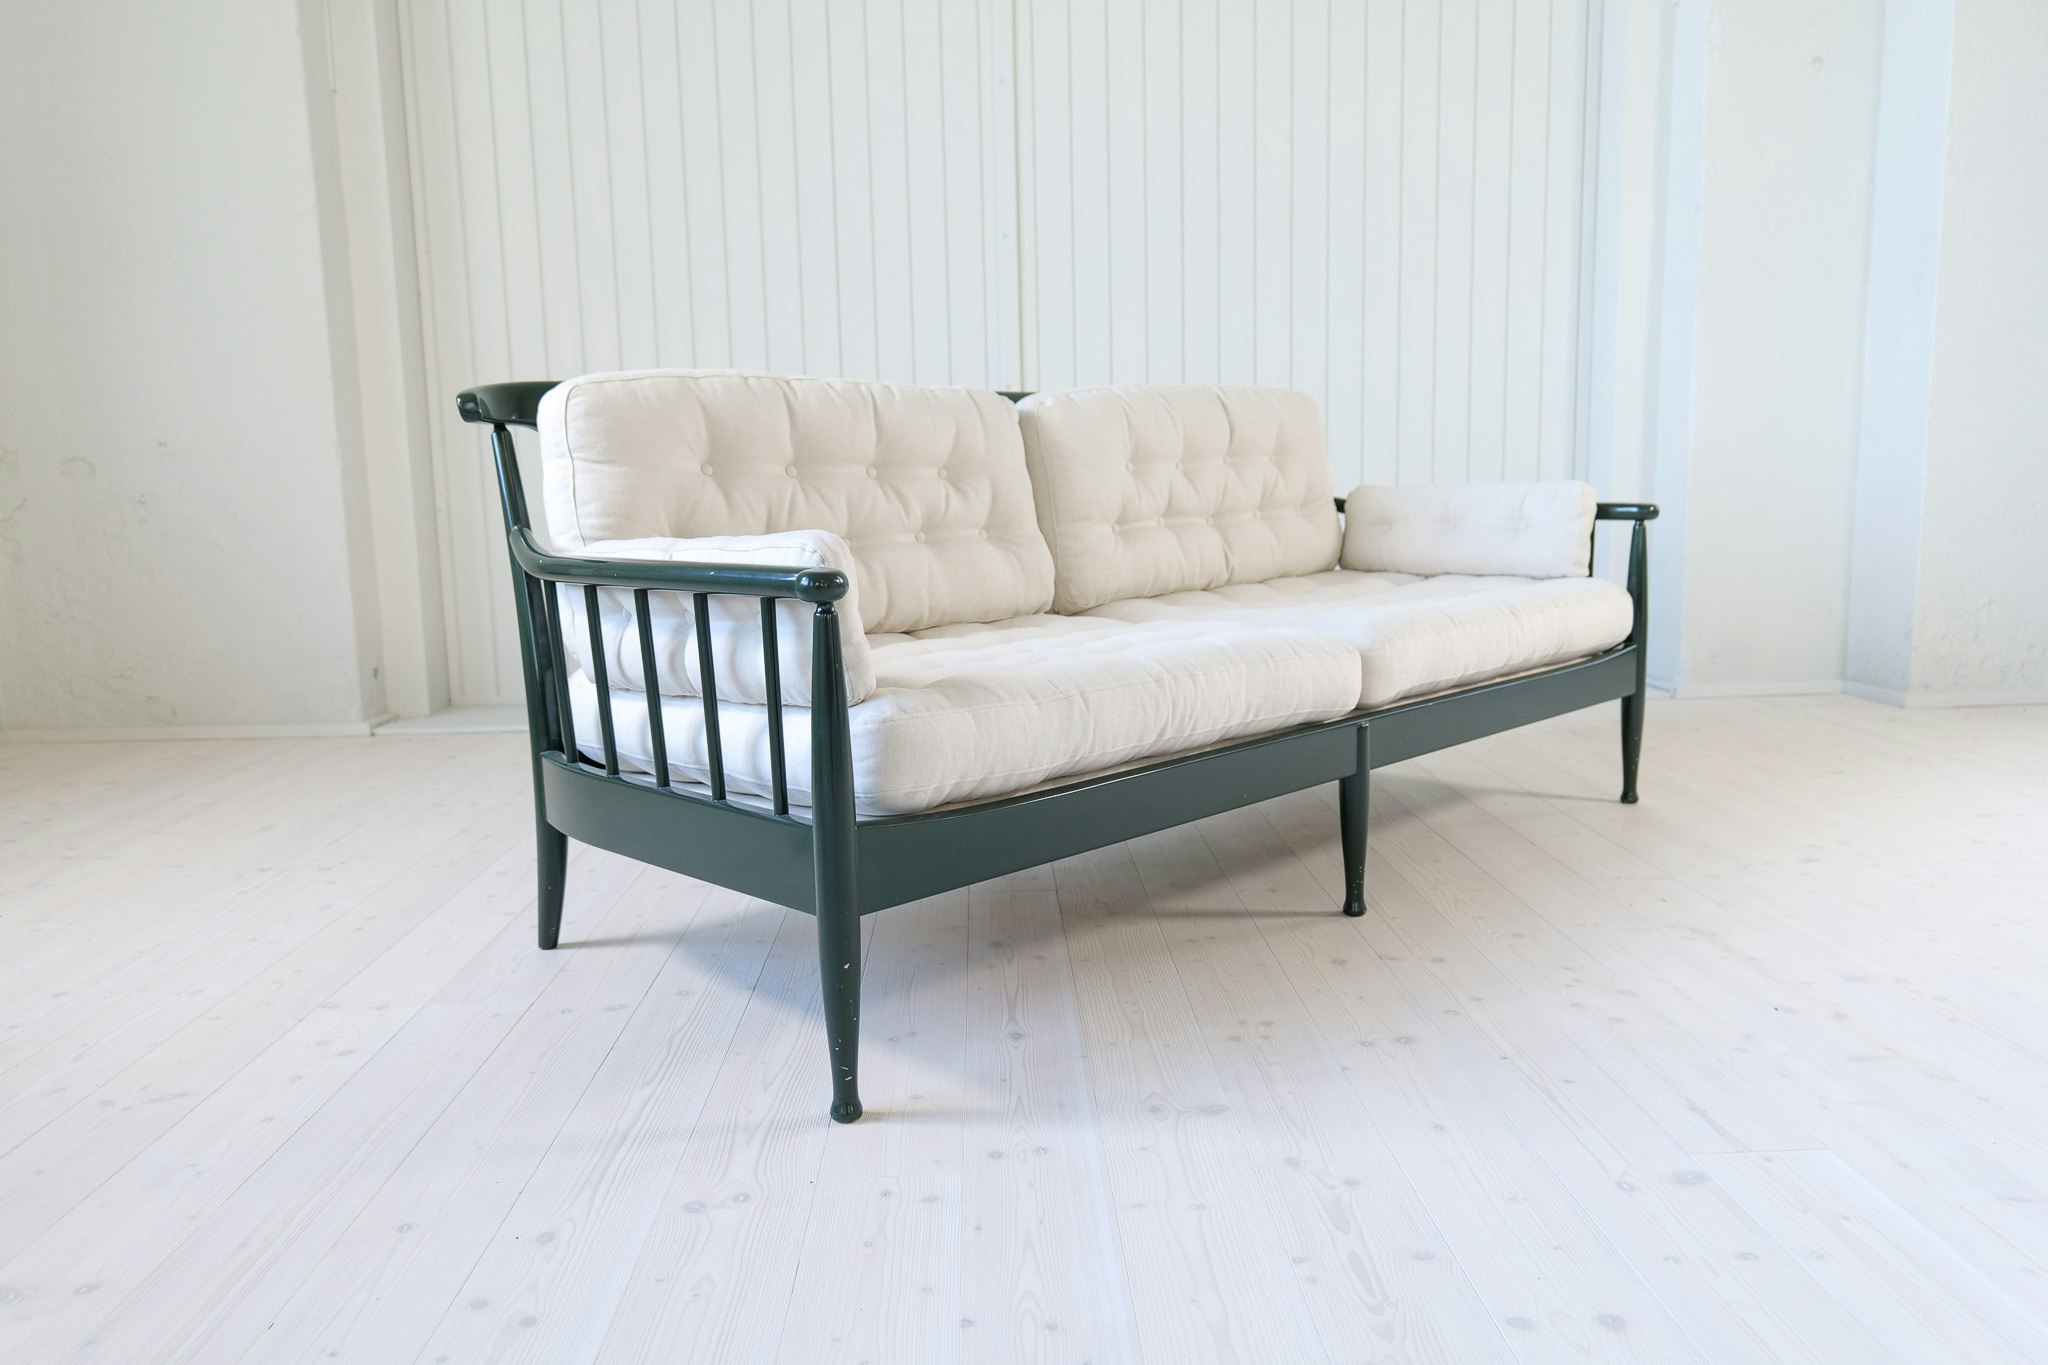 Midcentury Modern Sofa "Skrindan" by Kerstin Horlin-Holmqvist, Sweden, 1967